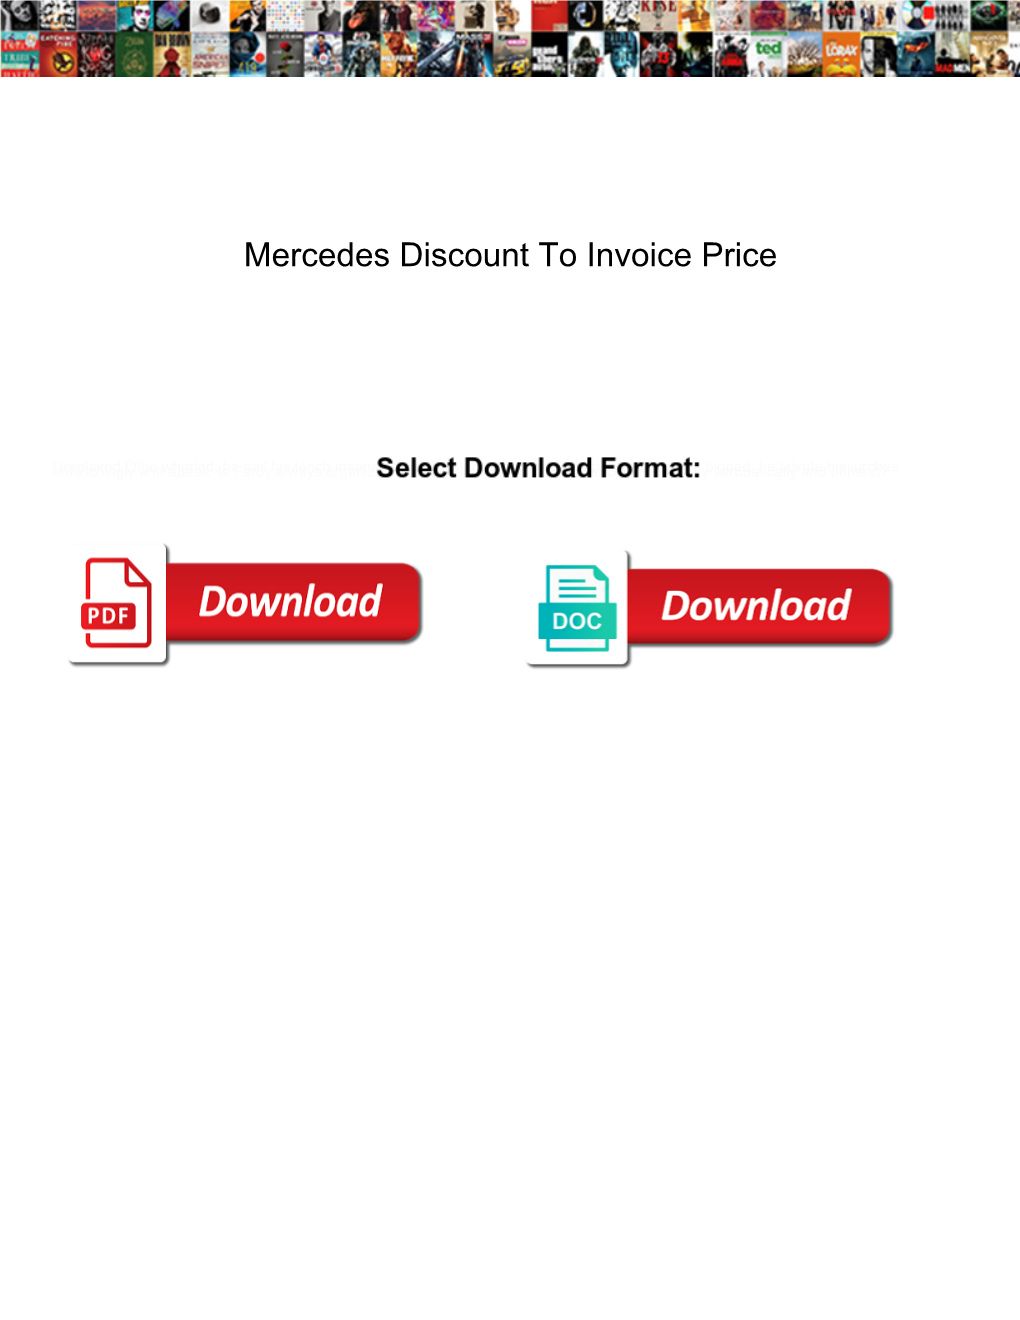 Mercedes Discount to Invoice Price